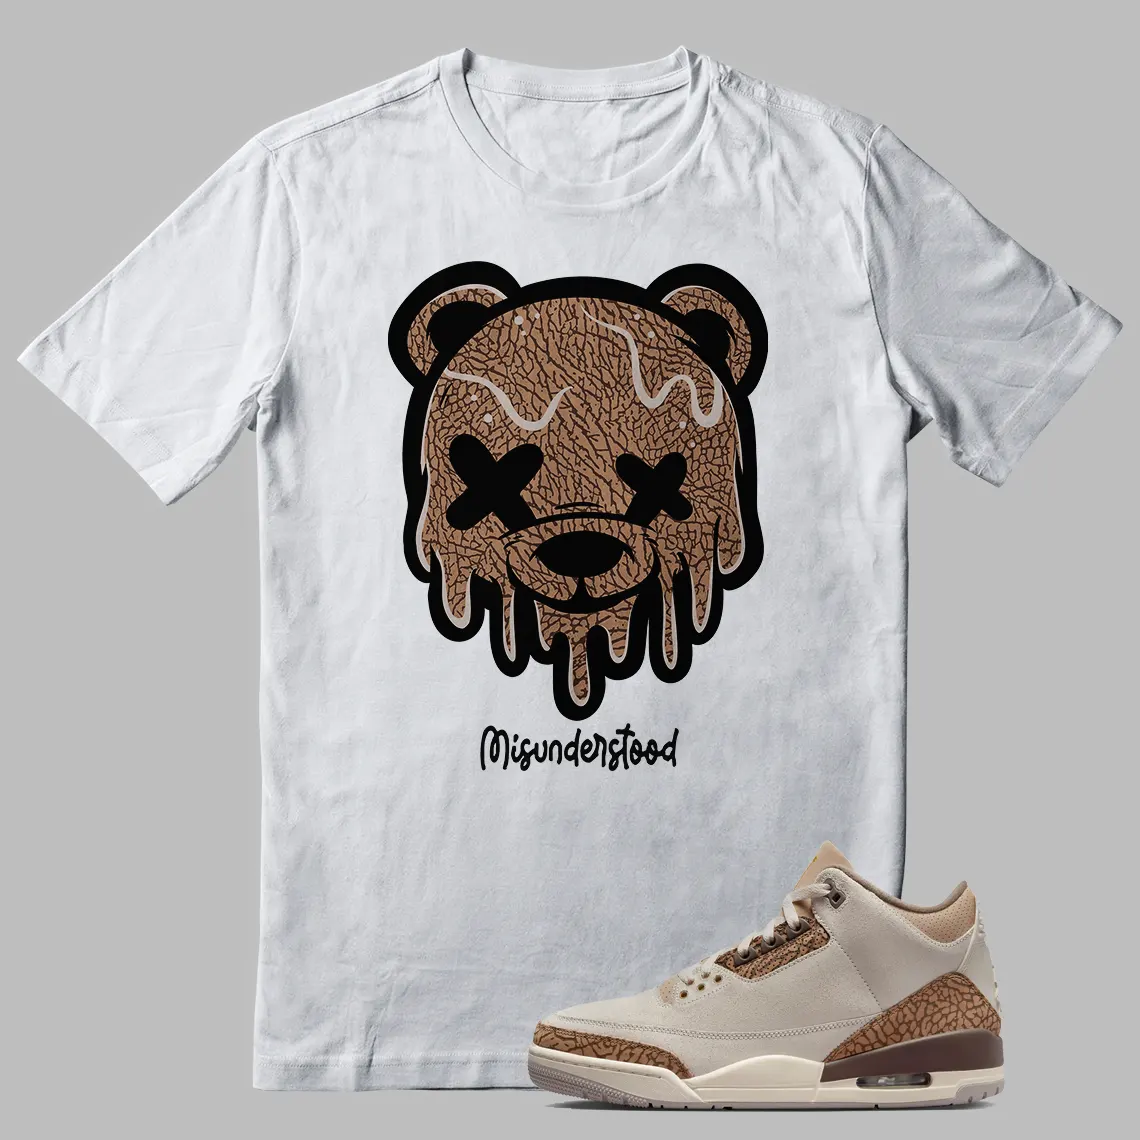 Jordan 3 Palomino Matching Shirt Dripping Bear Graphic